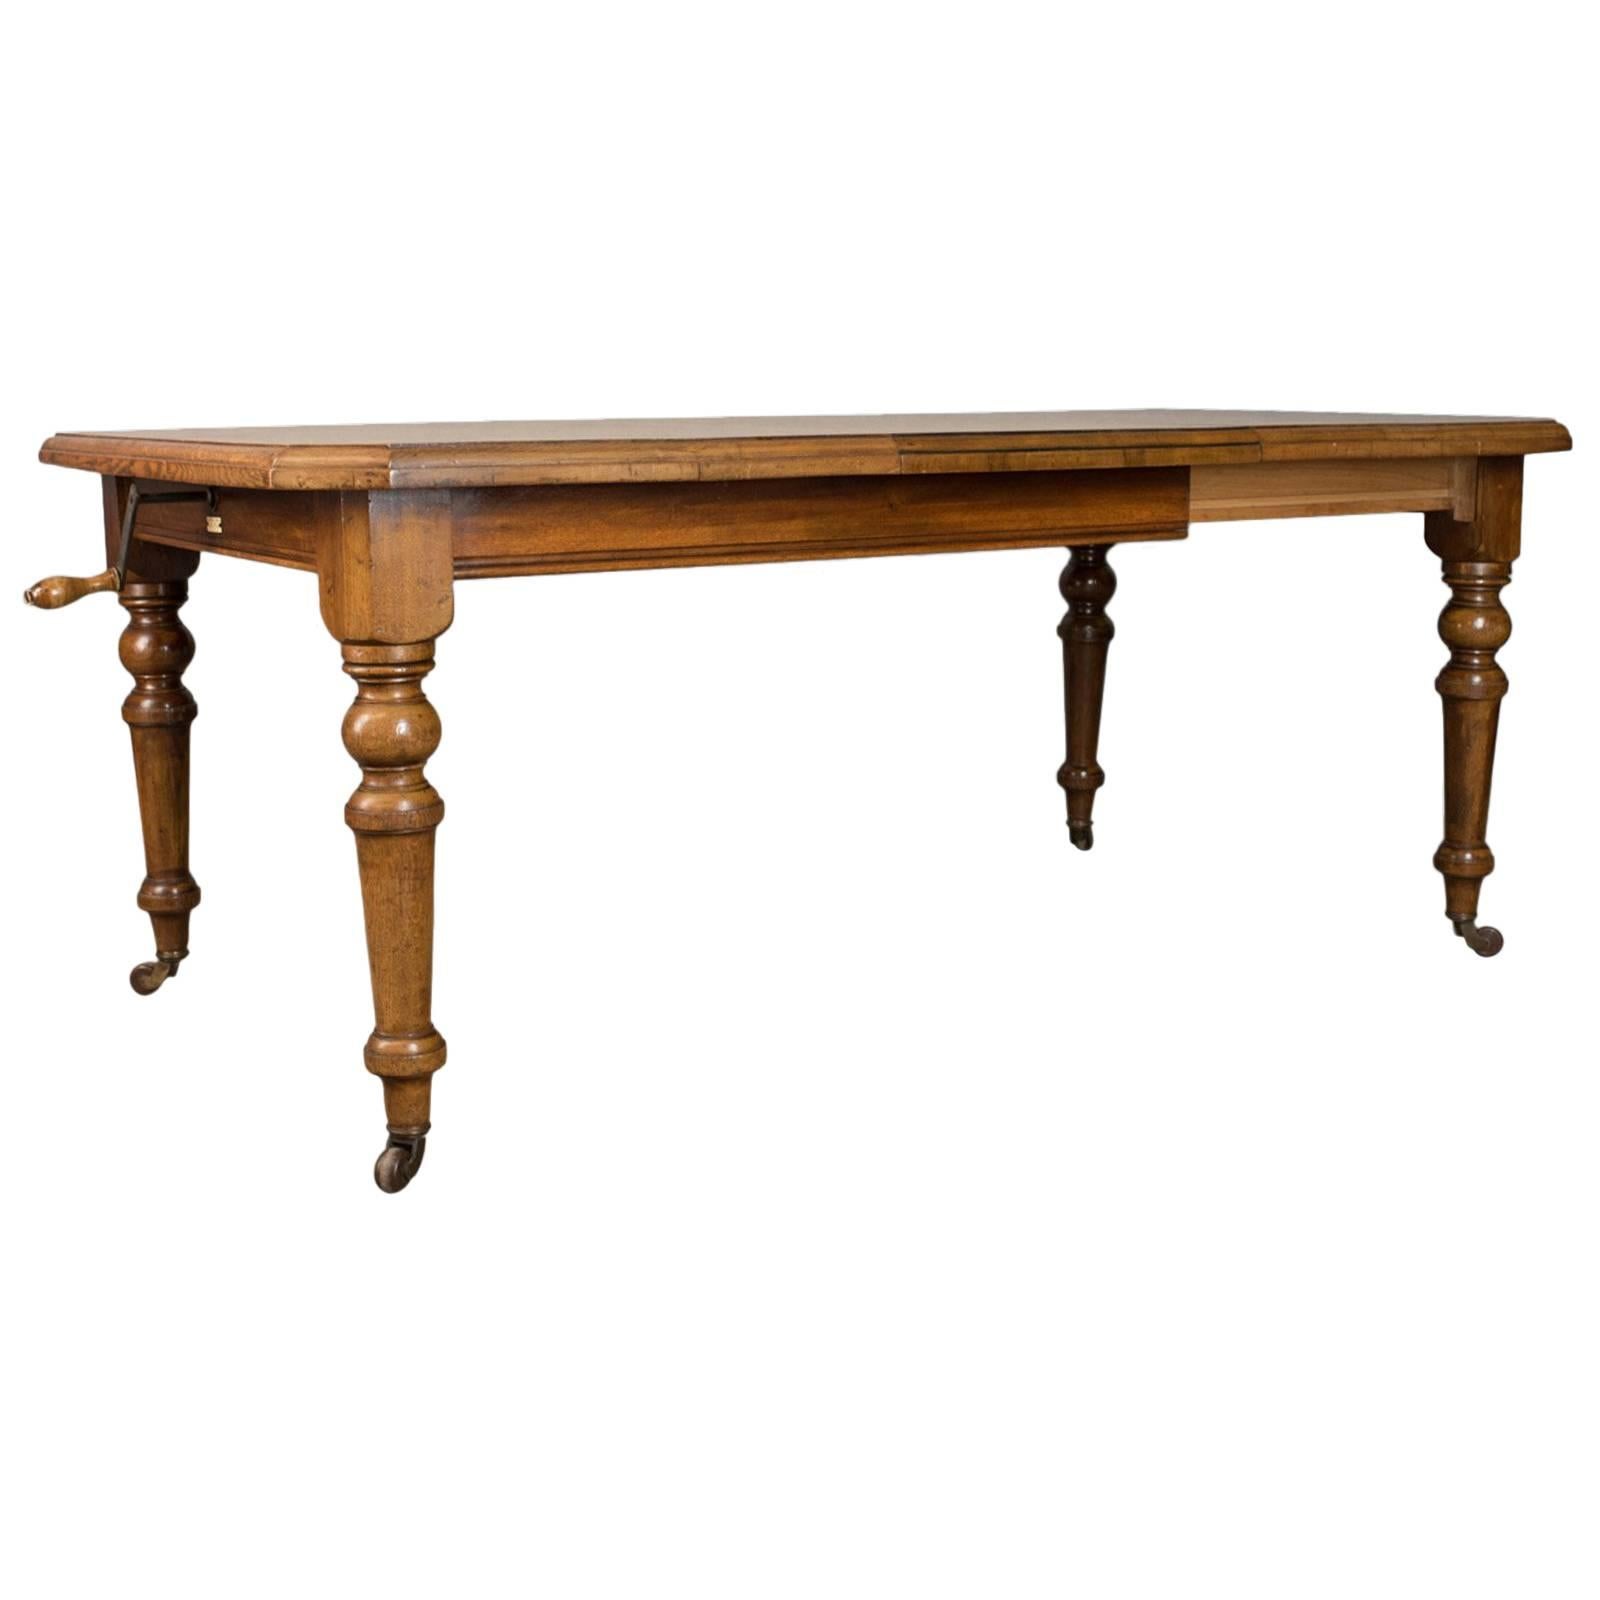 Antique Dining Table, Scottish, Oak, Extending, Seats Six, Matthew Lawson